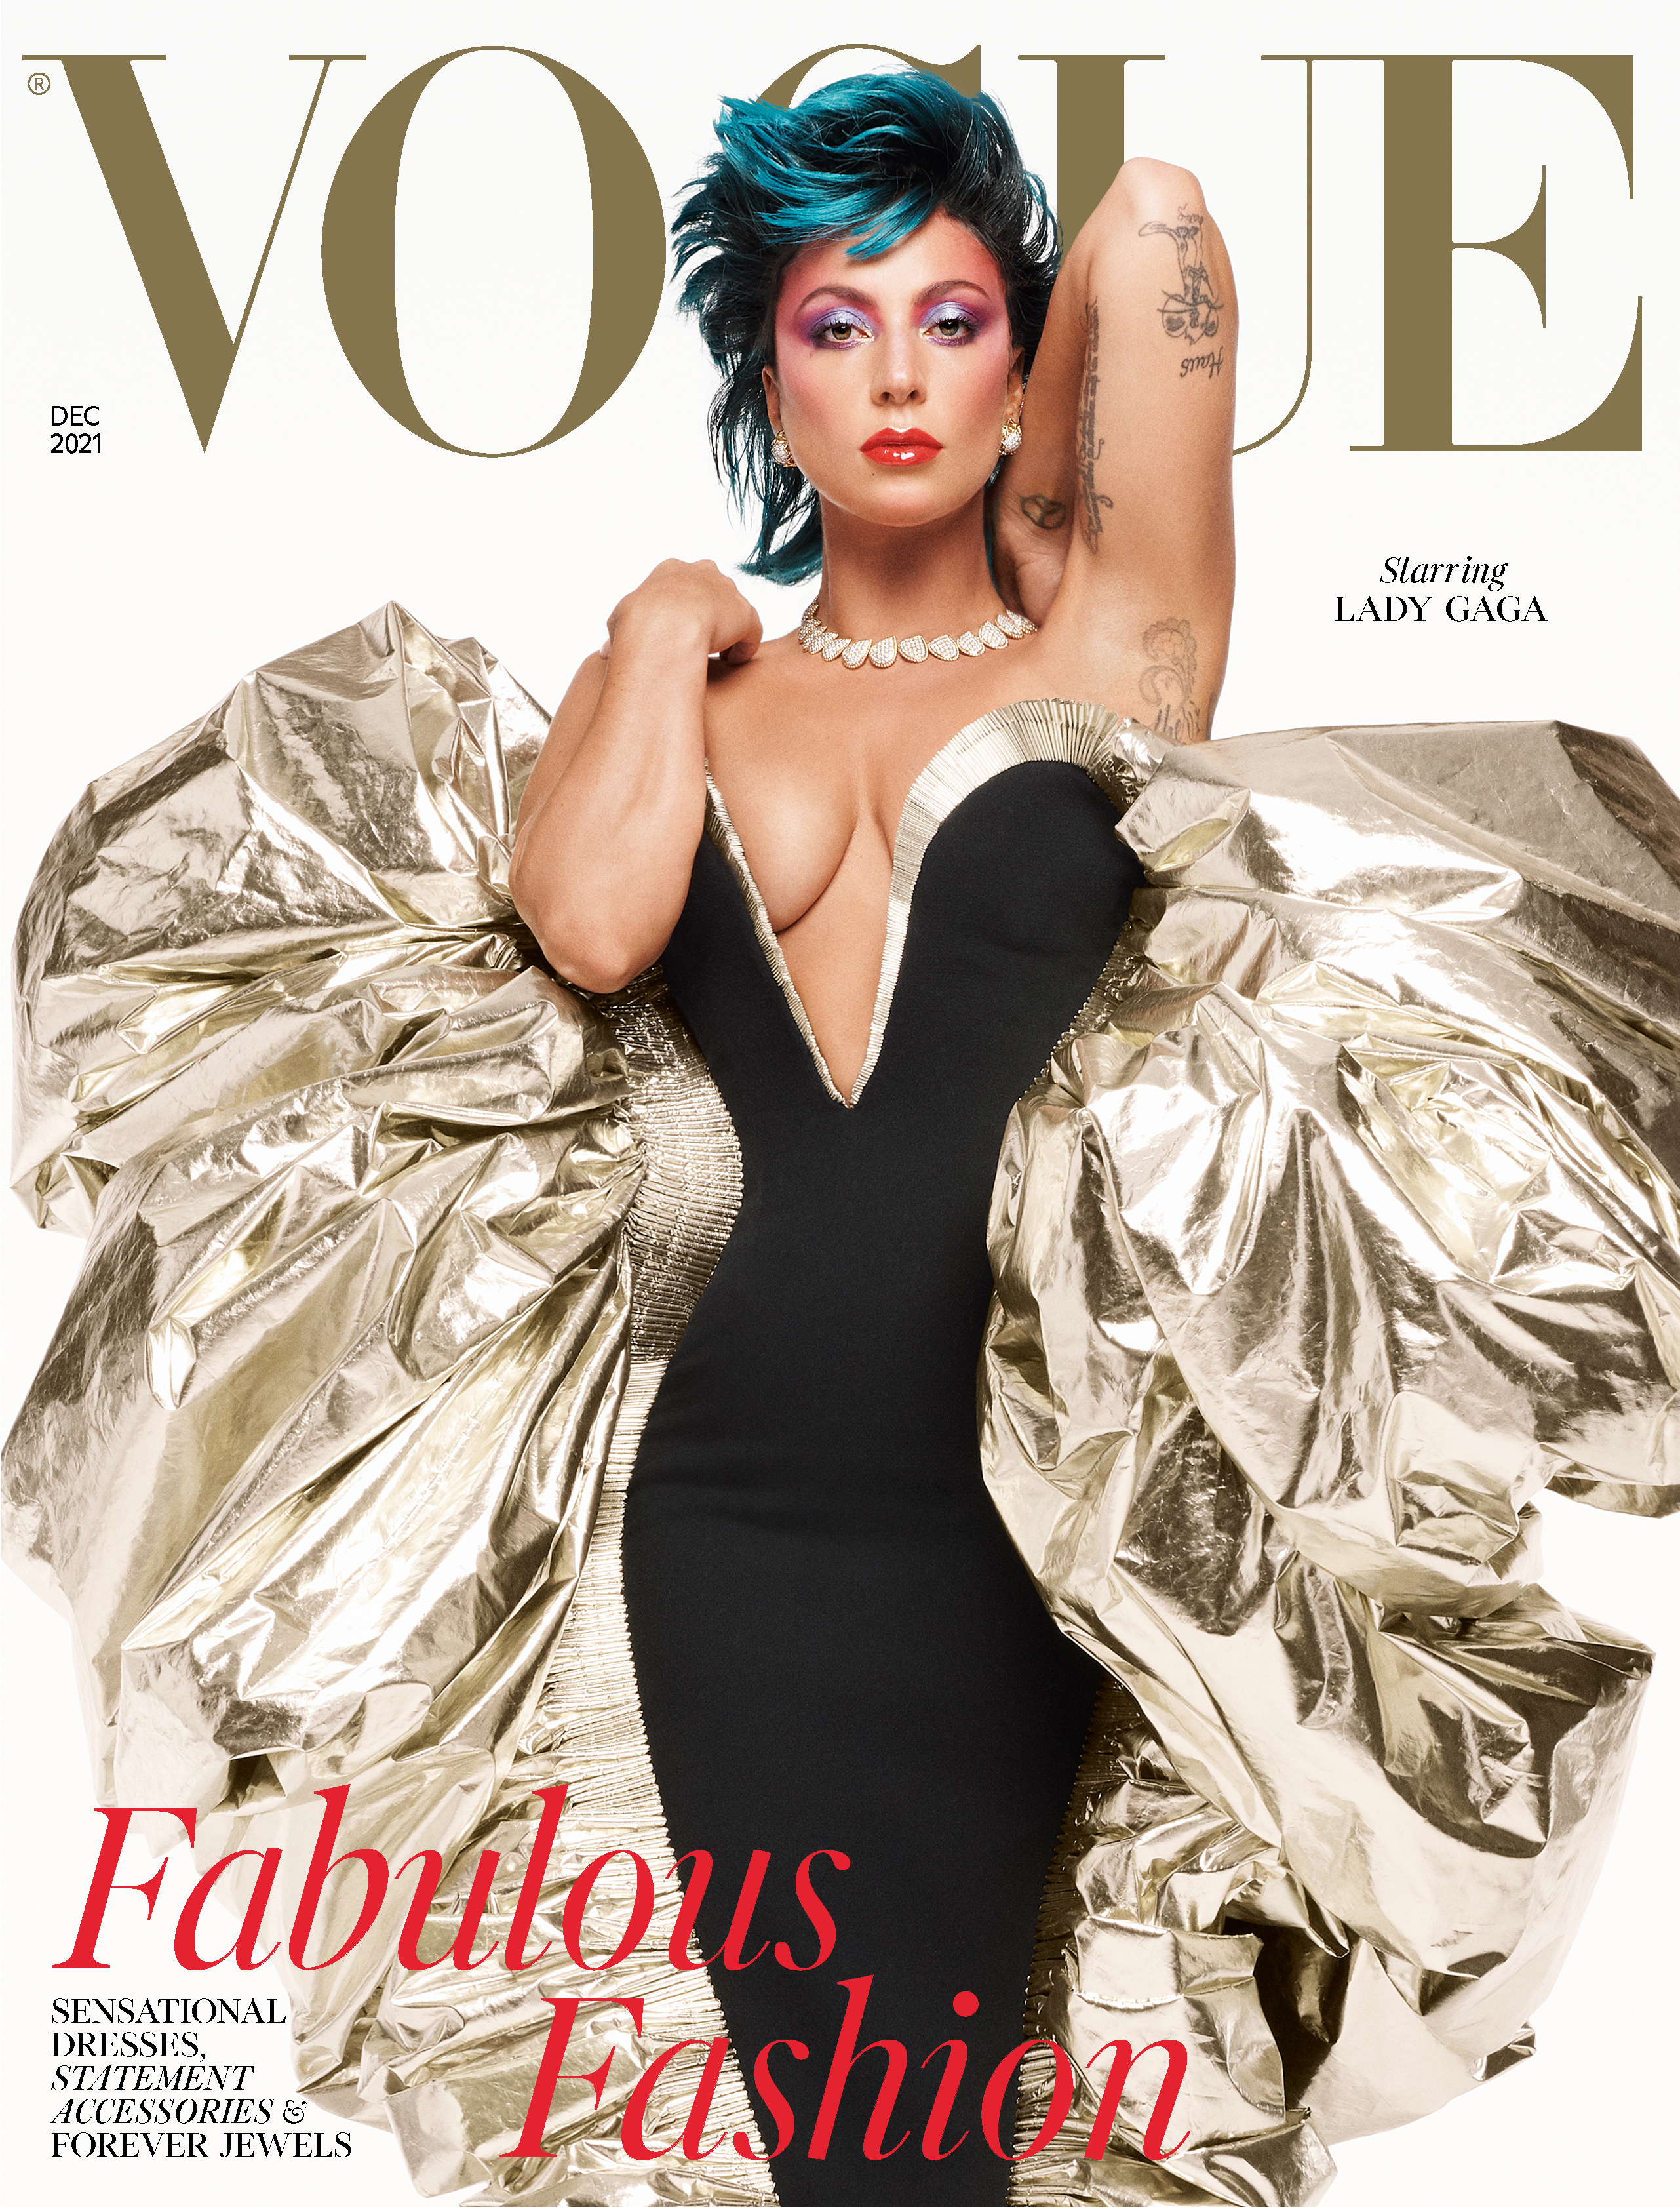 Lady Gaga covers British Vogue